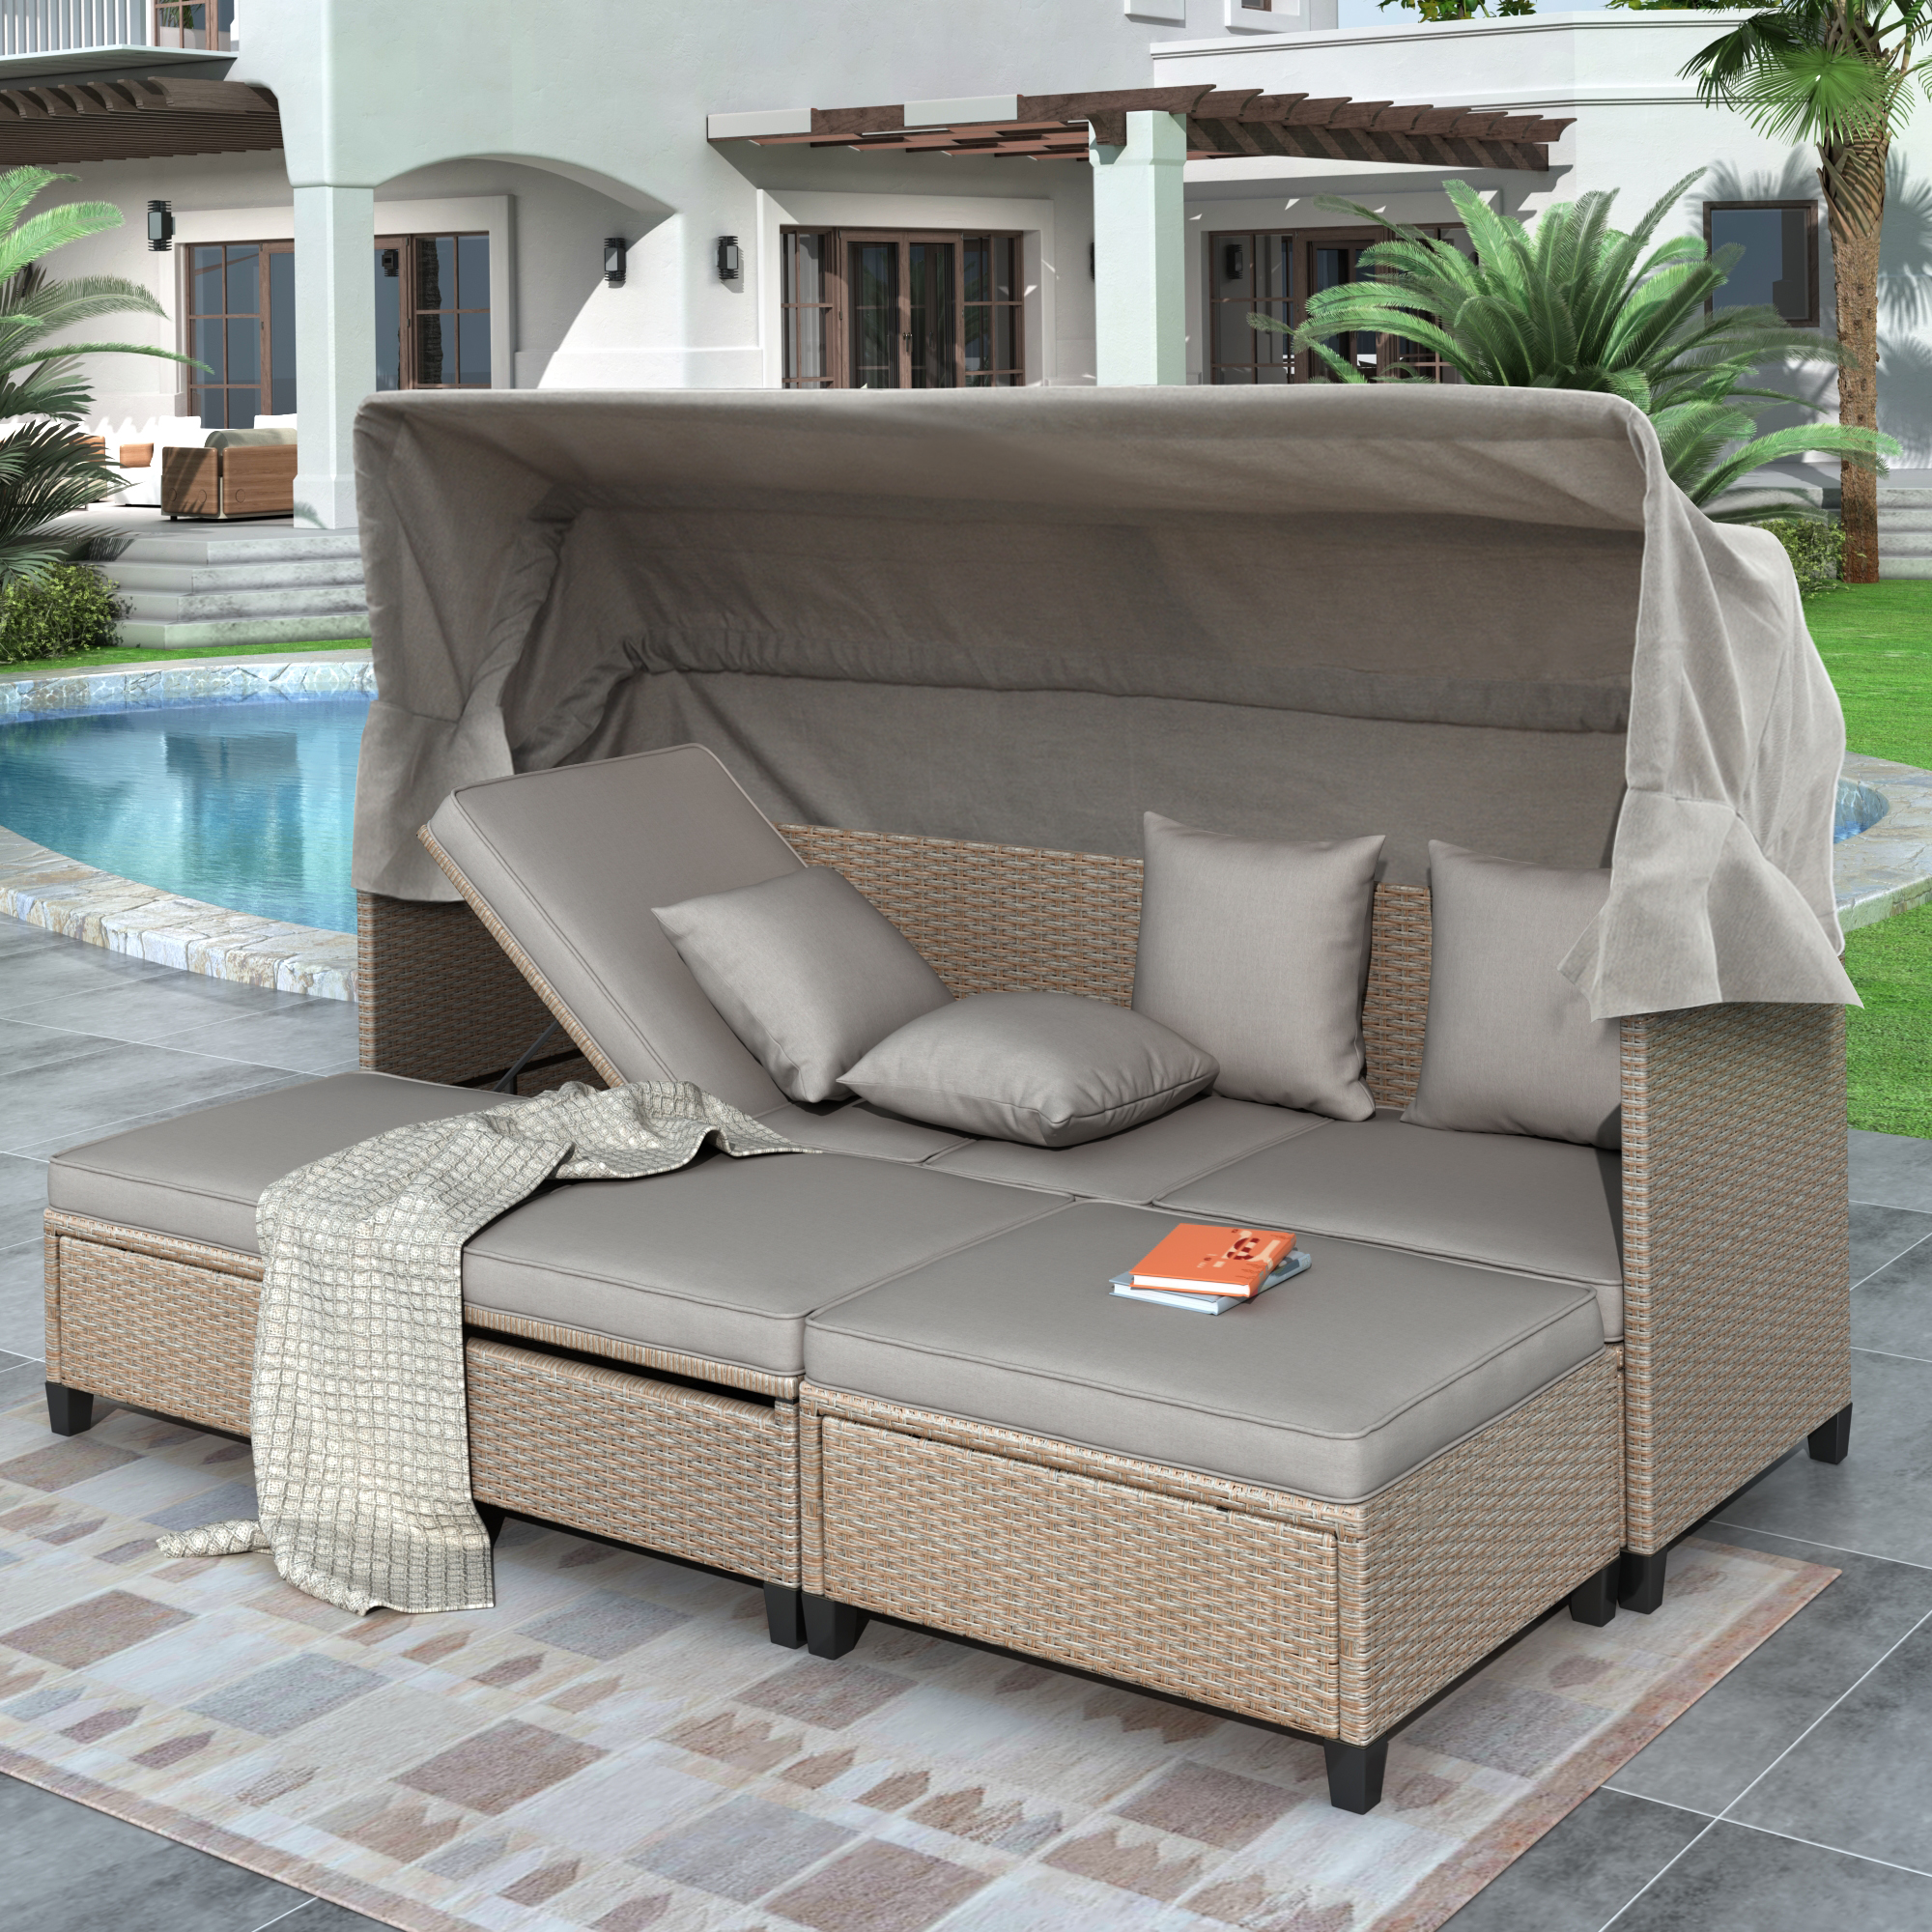 Mondawe 4 Pcs UV-Resistant Resin Wicker Patio Sofa Set with Retractable Canopy Cushions Lifting Table （Brown）-Mondawe